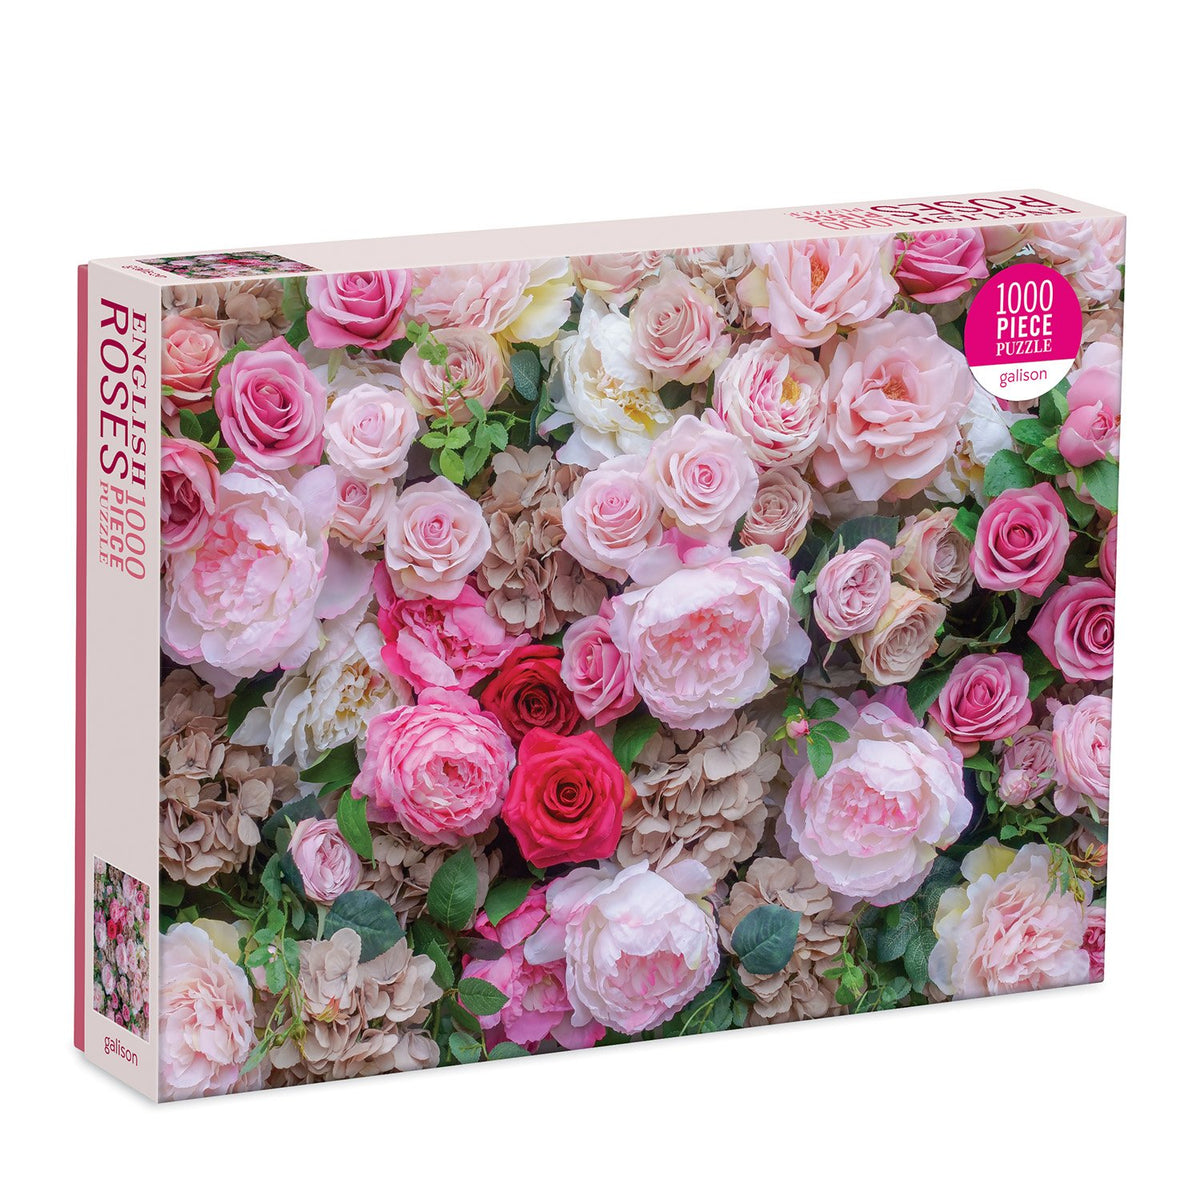 English Roses 1000 Piece Puzzle 1000 Piece Puzzles James Ogilvy Collection 